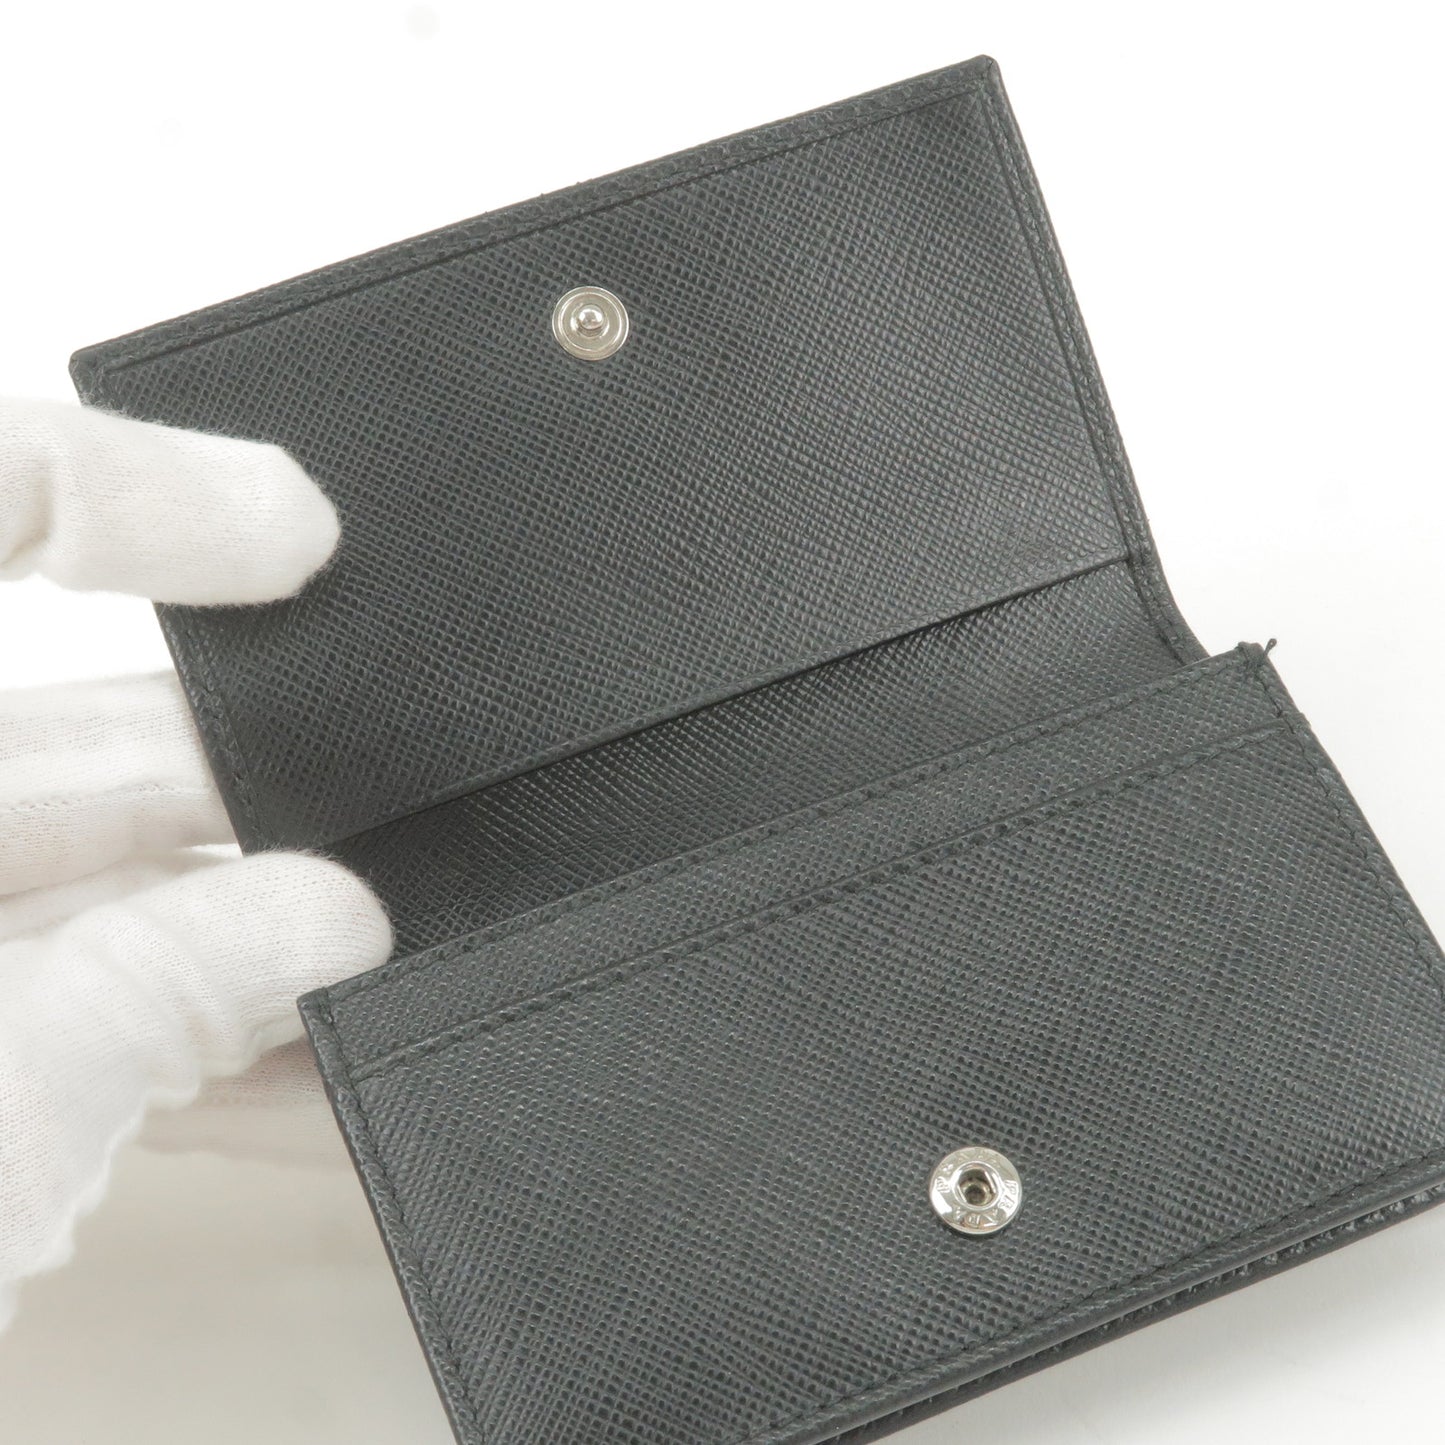 PRADA Logo Leather Card Case Card Holder NERO Black